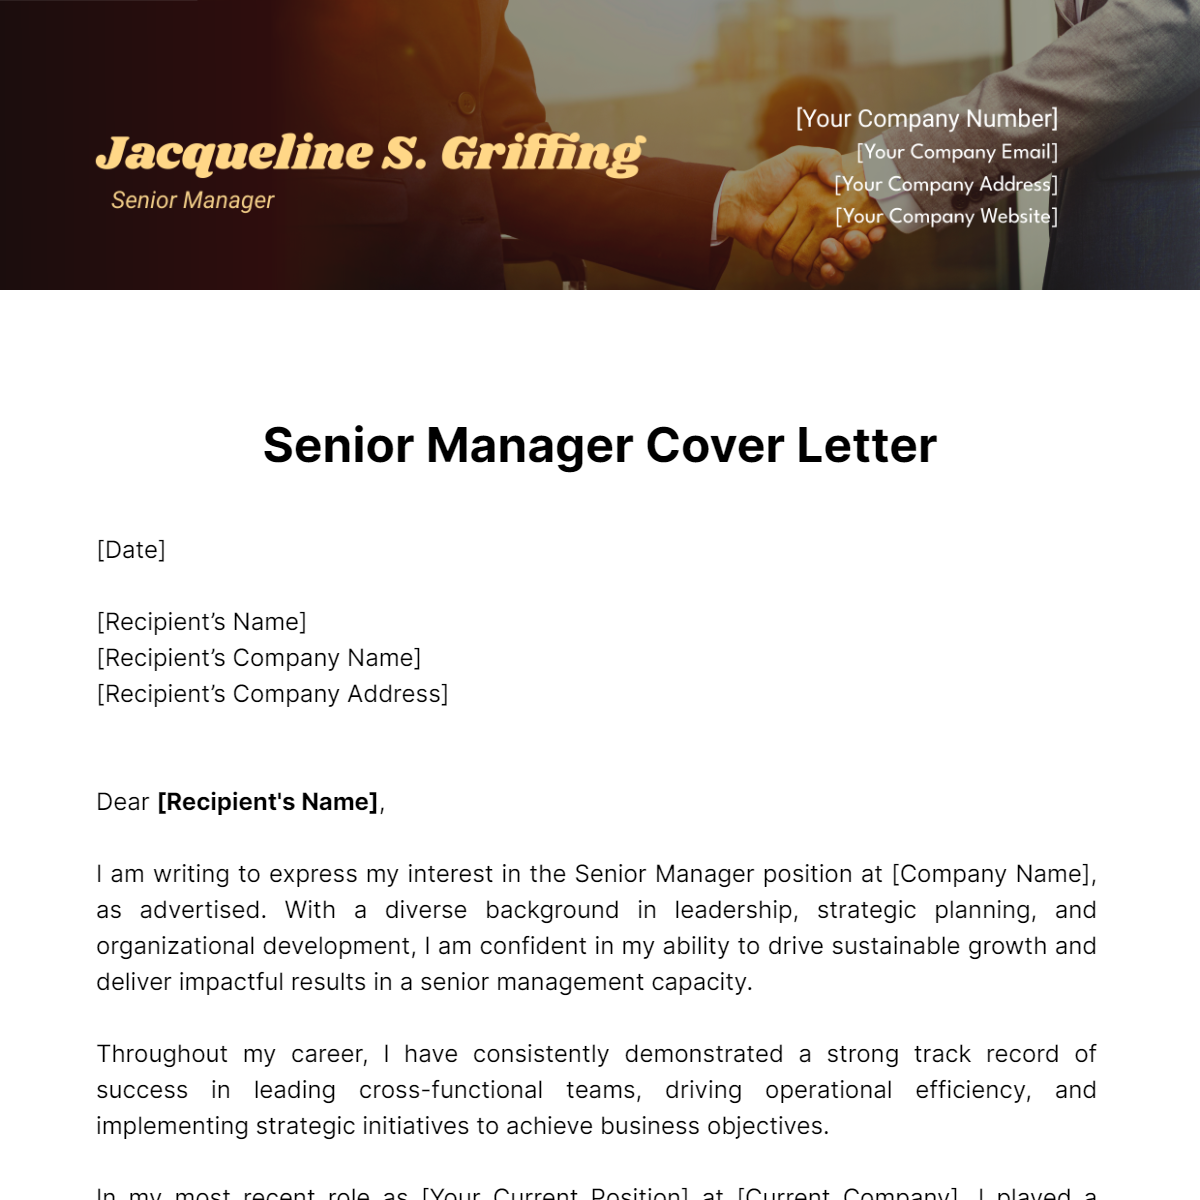 Senior Manager Cover Letter Template